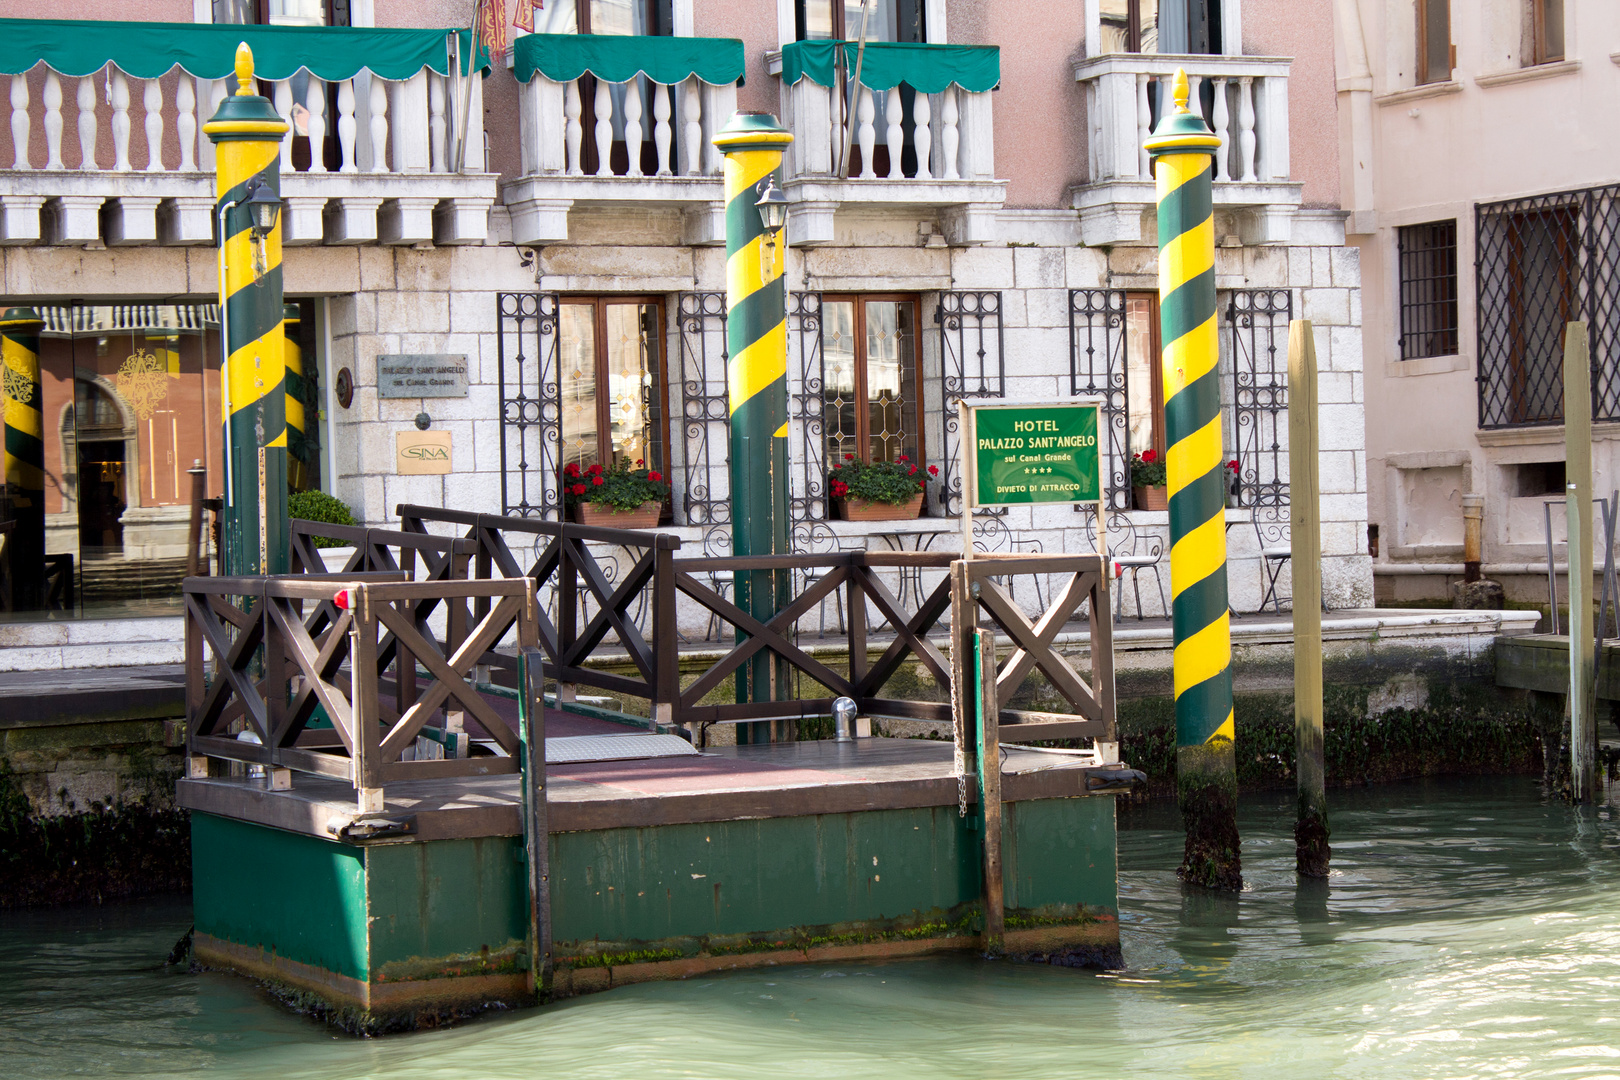 Hotel Palazzo Sant'Angelo mit Bootsanleger am Canal Grande, Venedig